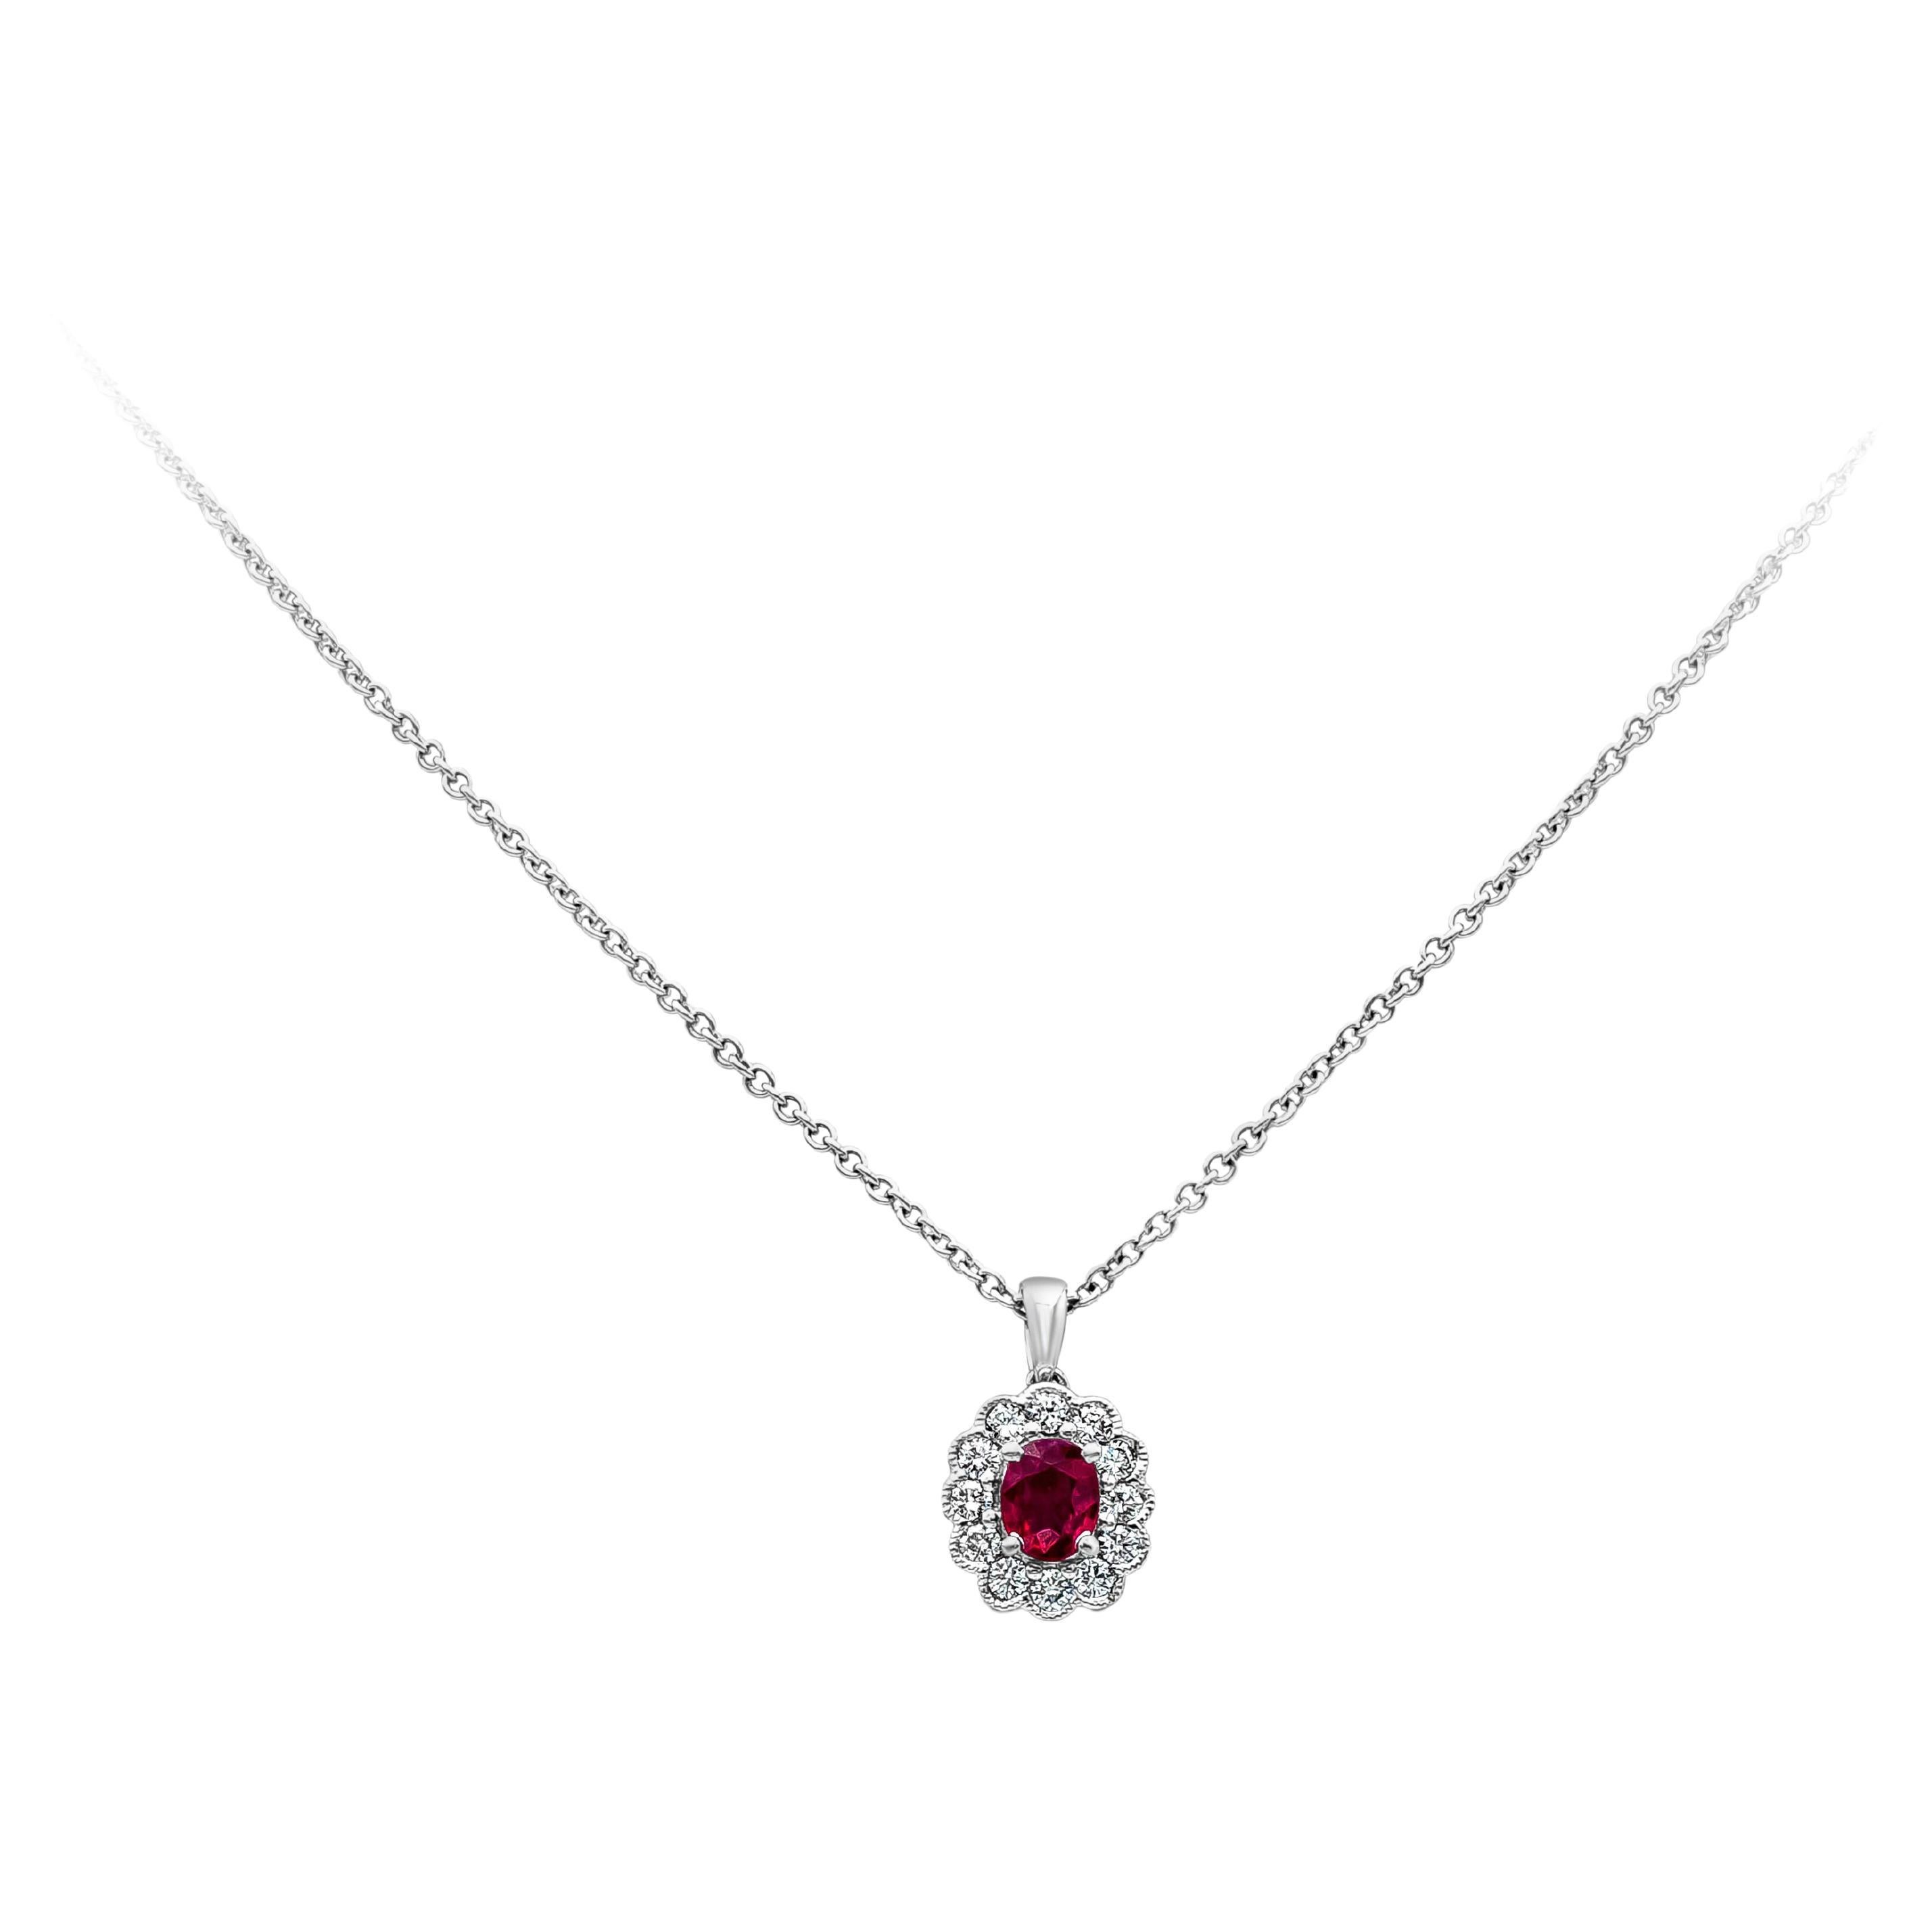 Roman Malakov 0.65 Carat Oval Cut Ruby with Diamond Halo Pendant Necklace